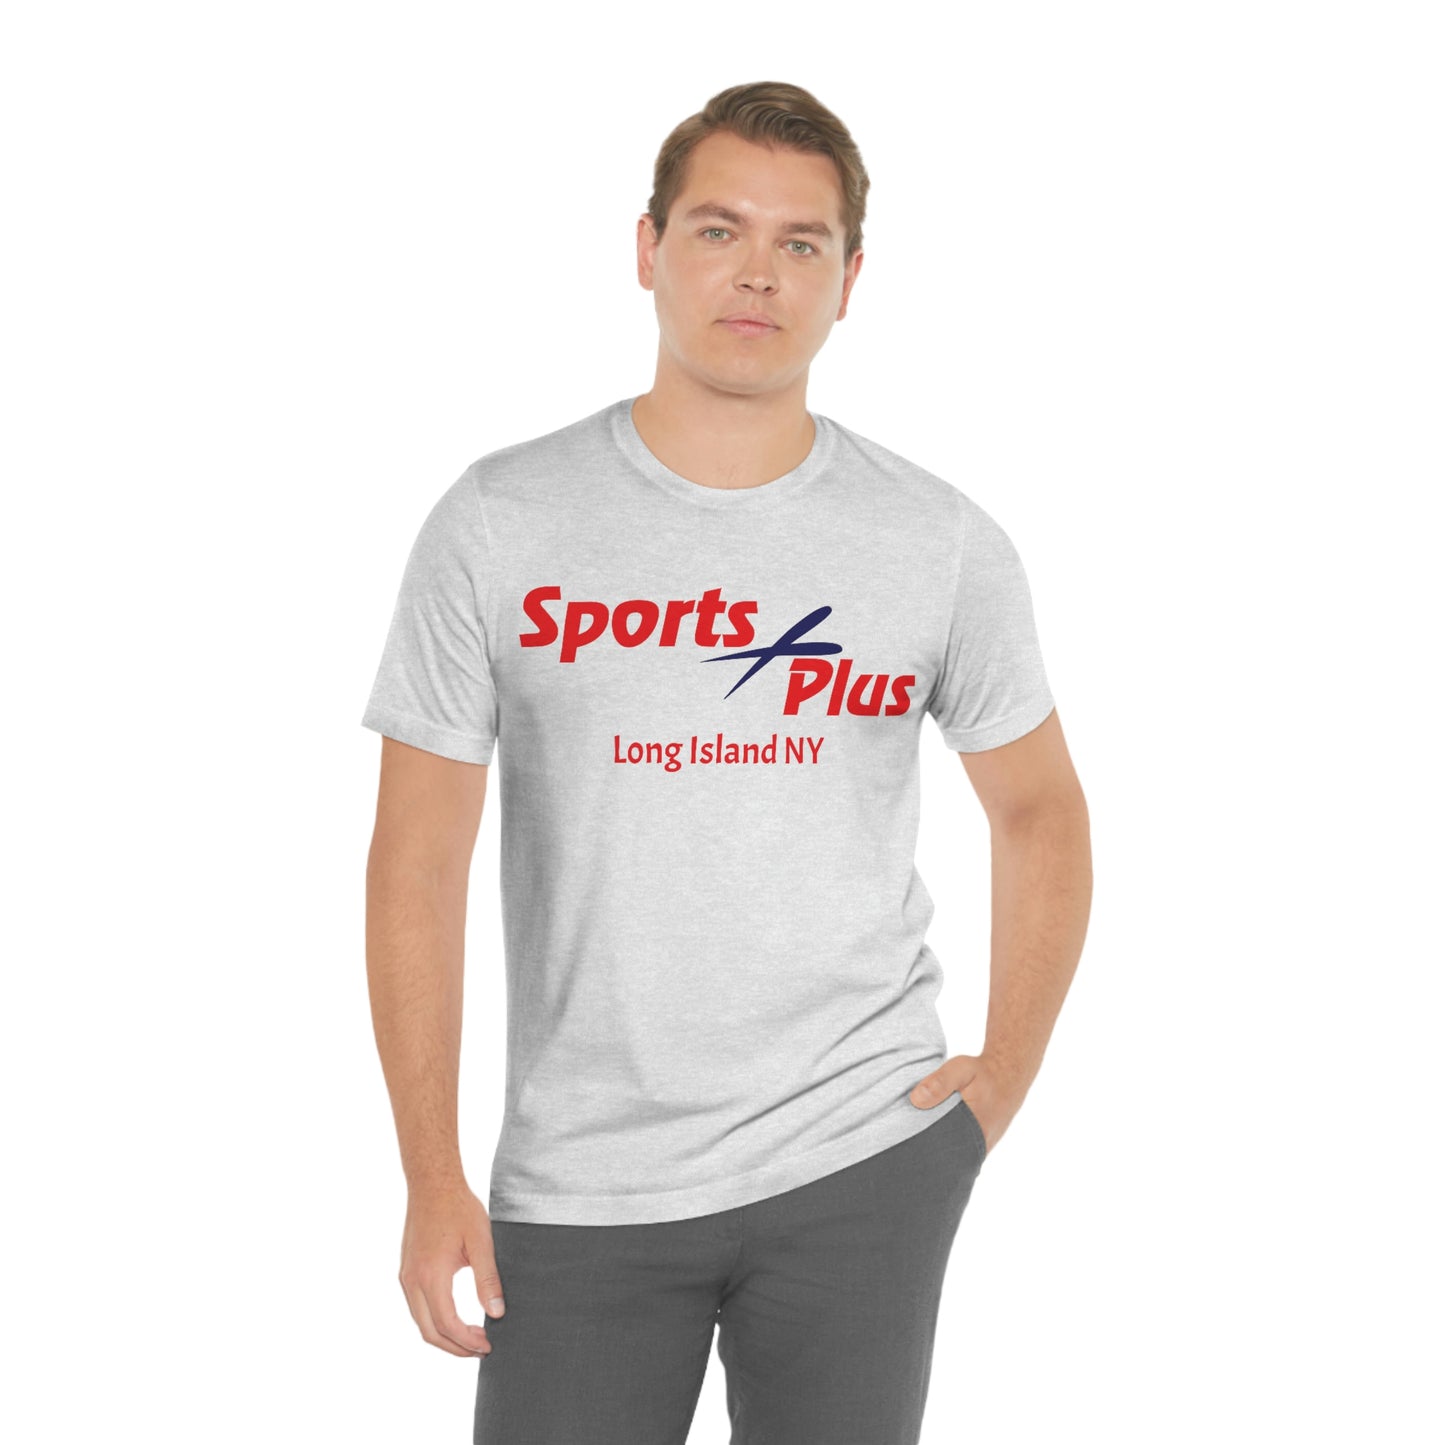 Sports Plus Mall Arcade Long Island NY Retro 90's Hangout T-Shirt Gaming